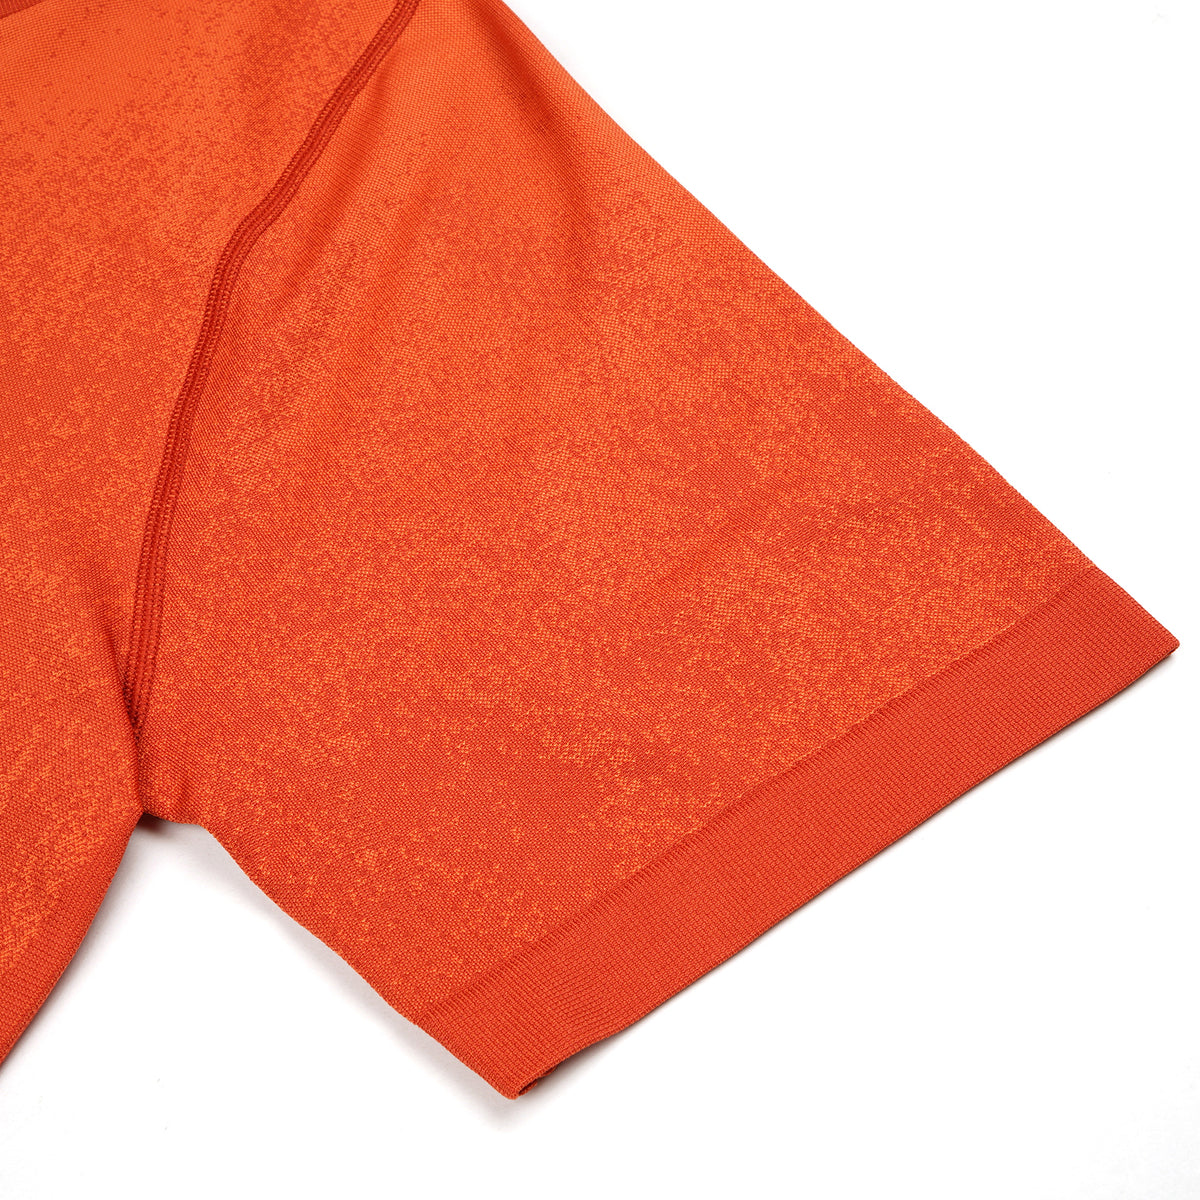 adidas | x UNDEFEATED Knit T-Shirt Orange - Concrete